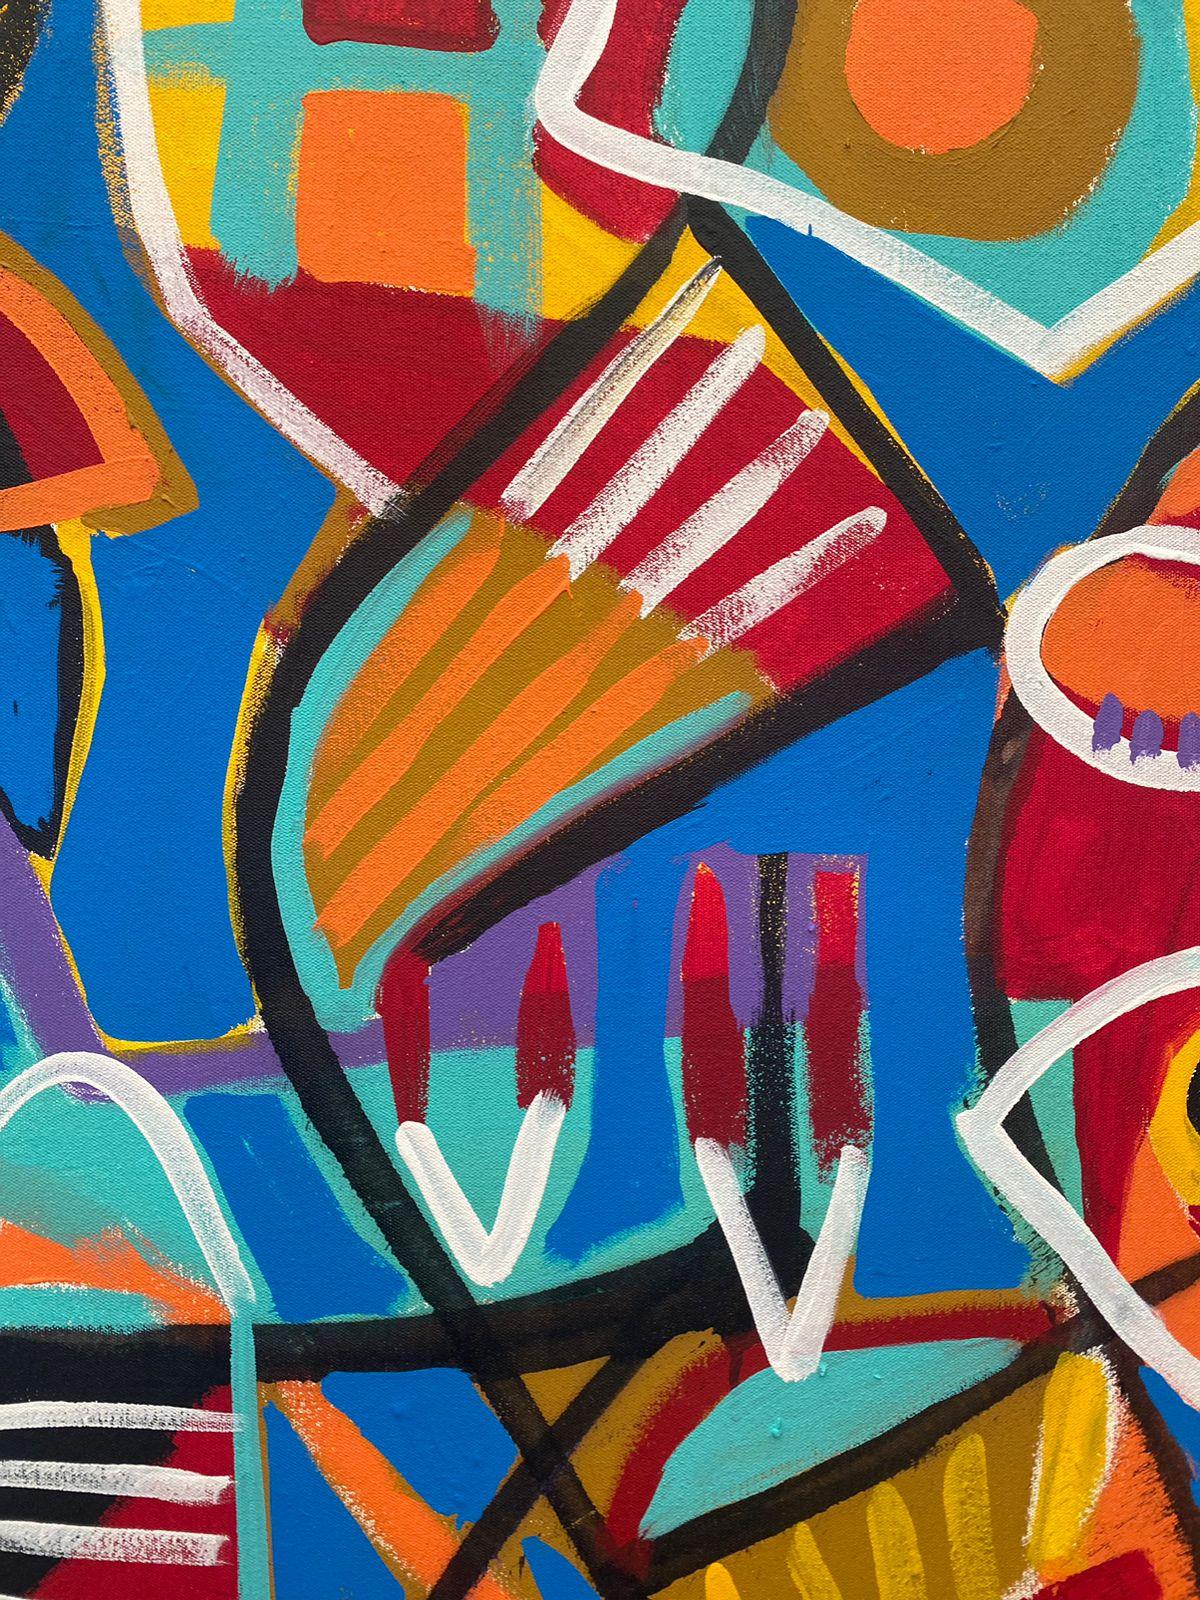 Contemporary Art, Abstract Painting
Acrylic on canvas
150x200cm
Signed 
FREE SHIPPING ROLLED UP


About the artist
Enrique Pichardo (Mexico City, 1973) graduated from Escuela Nacional de Pintura, Escultura y Grabado (ENPEG) “La Esmeralda”. As a